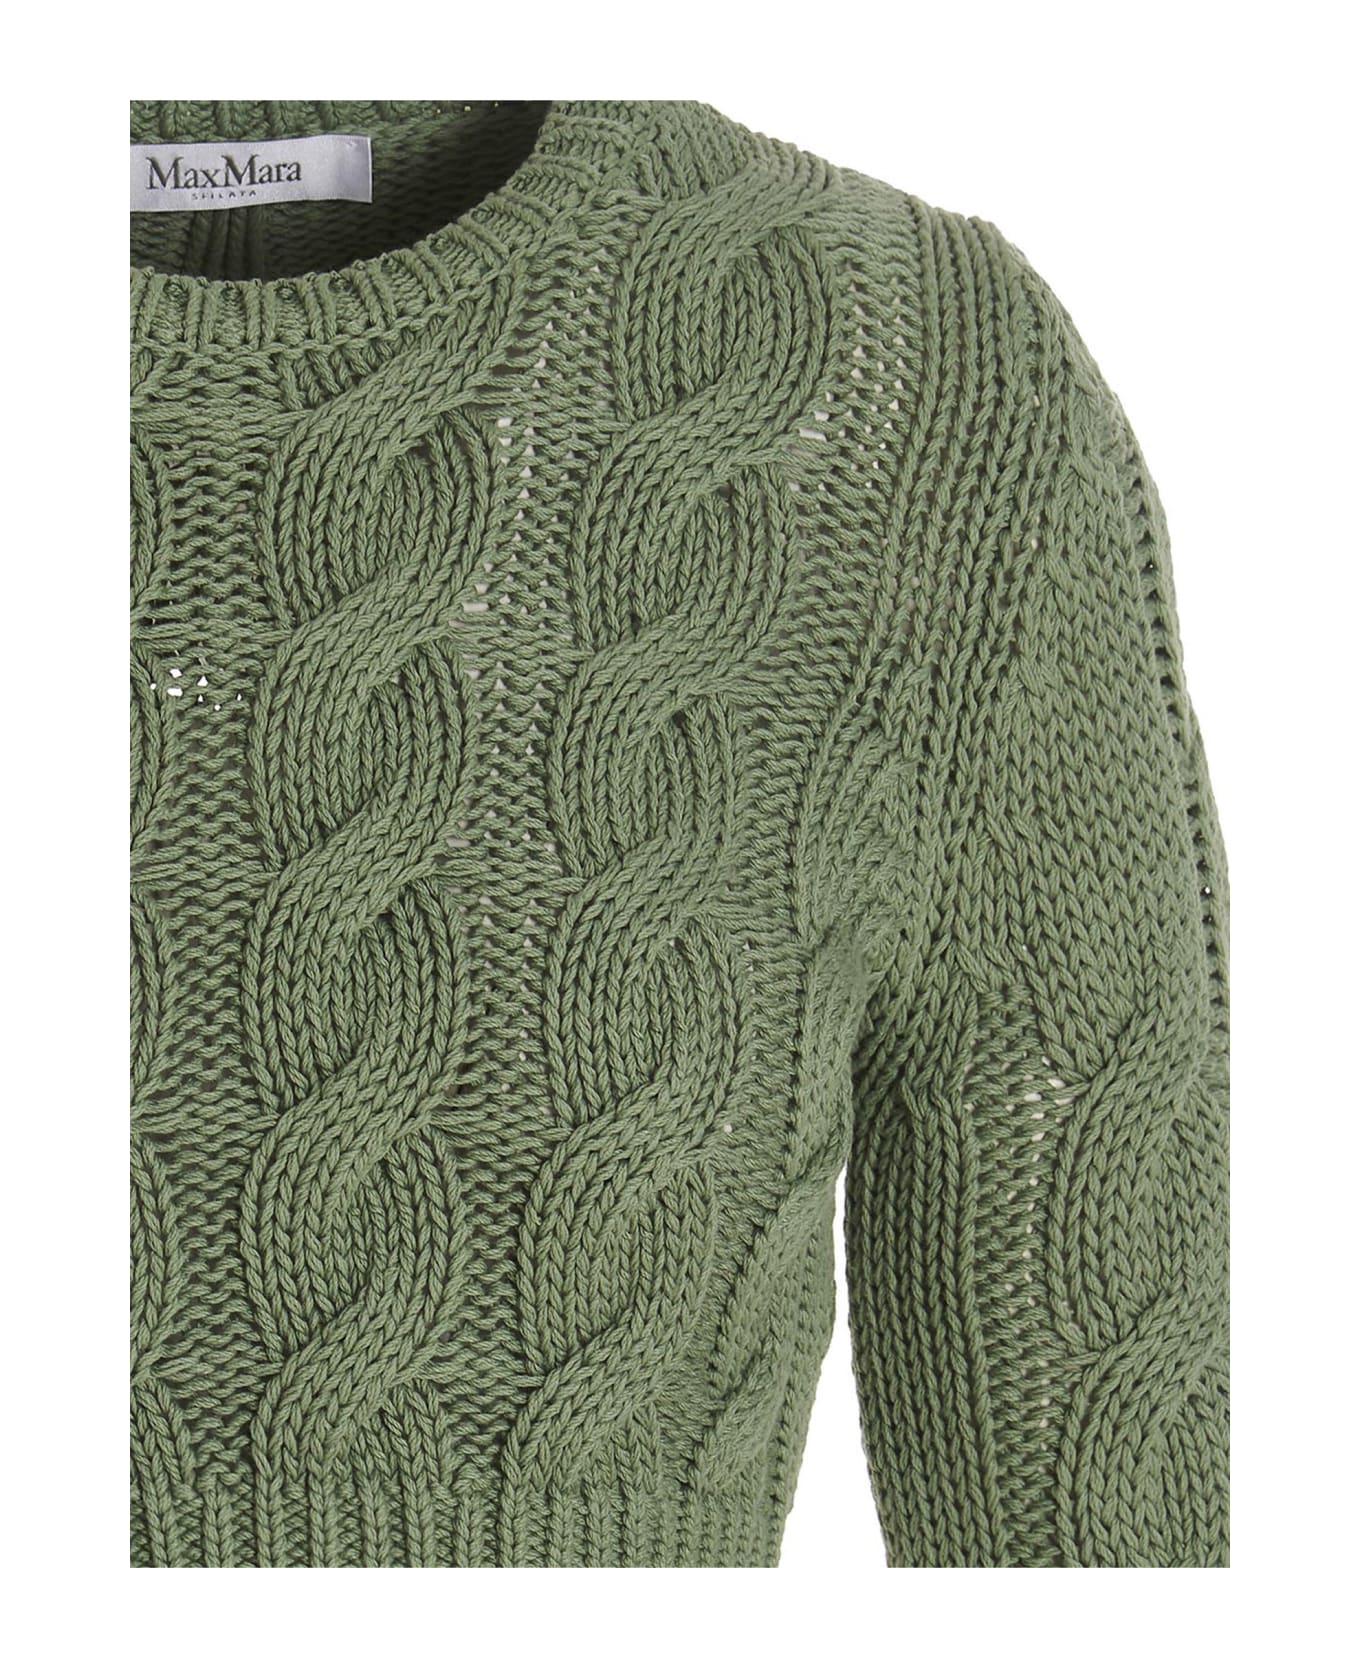 Max Mara 'sphinx' Sweater - Green ニットウェア